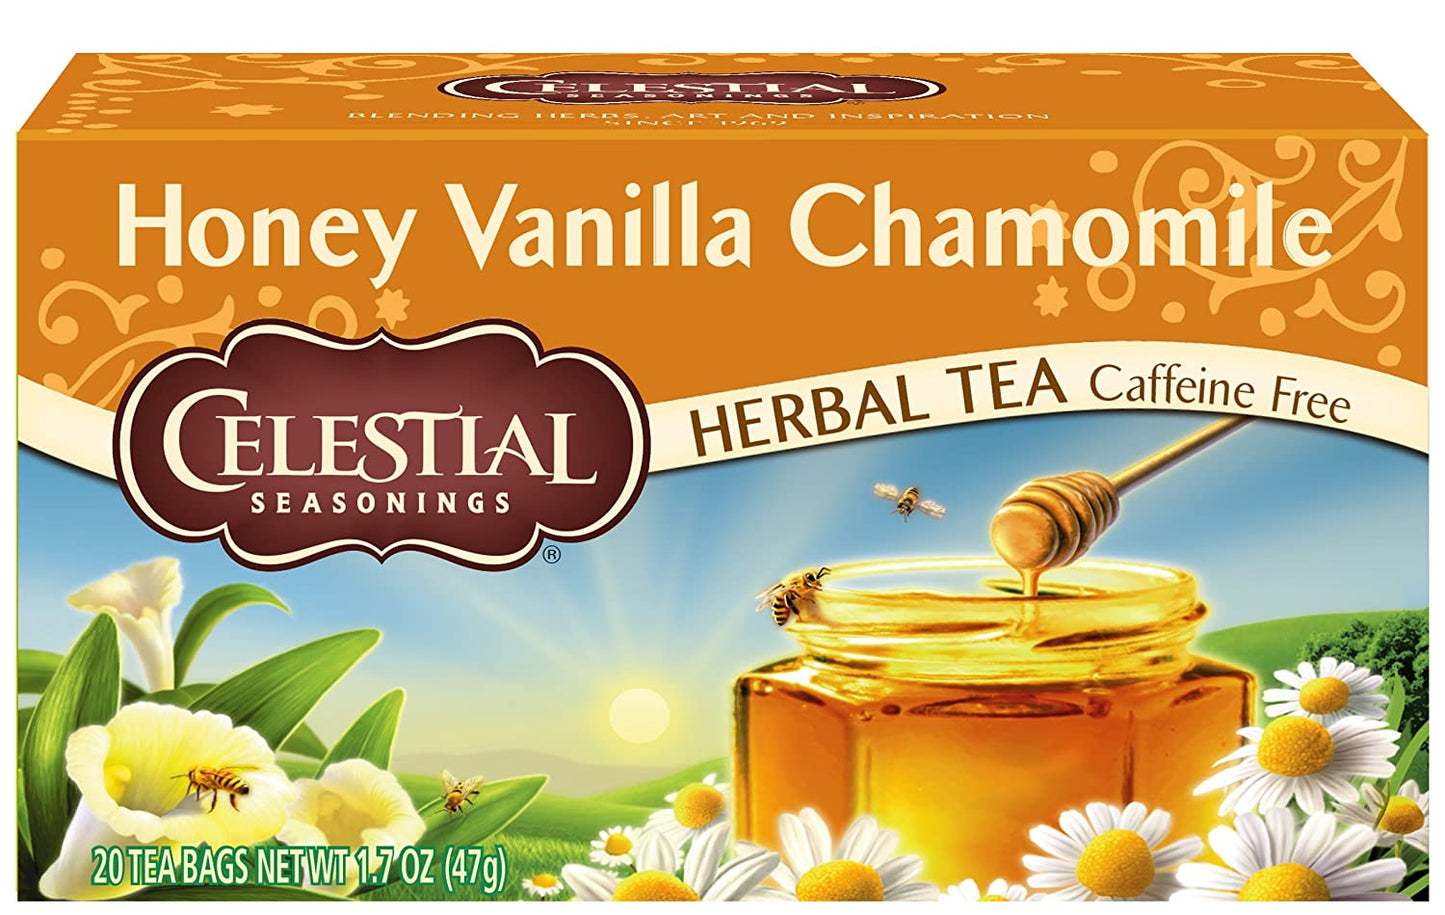 Celestial Seasonings Honey Vanilla Chamomile